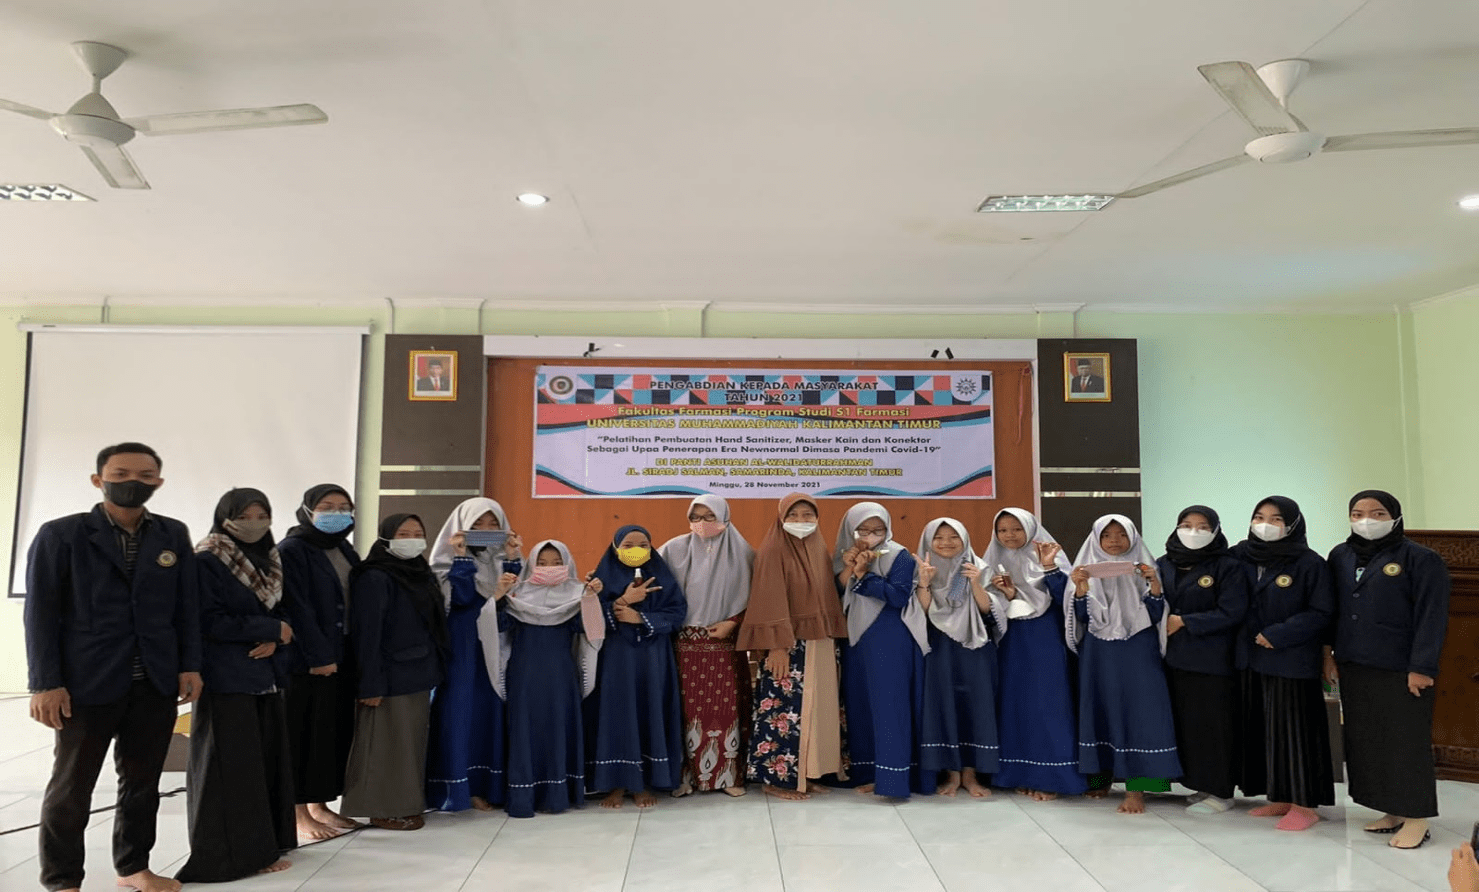 Kegiatan pengabdian masyarakat diharapkan memberi manfaat ke anak-anak Panti Asuhan Aisyiyah Al Walidaturrahmah di Samarinda.